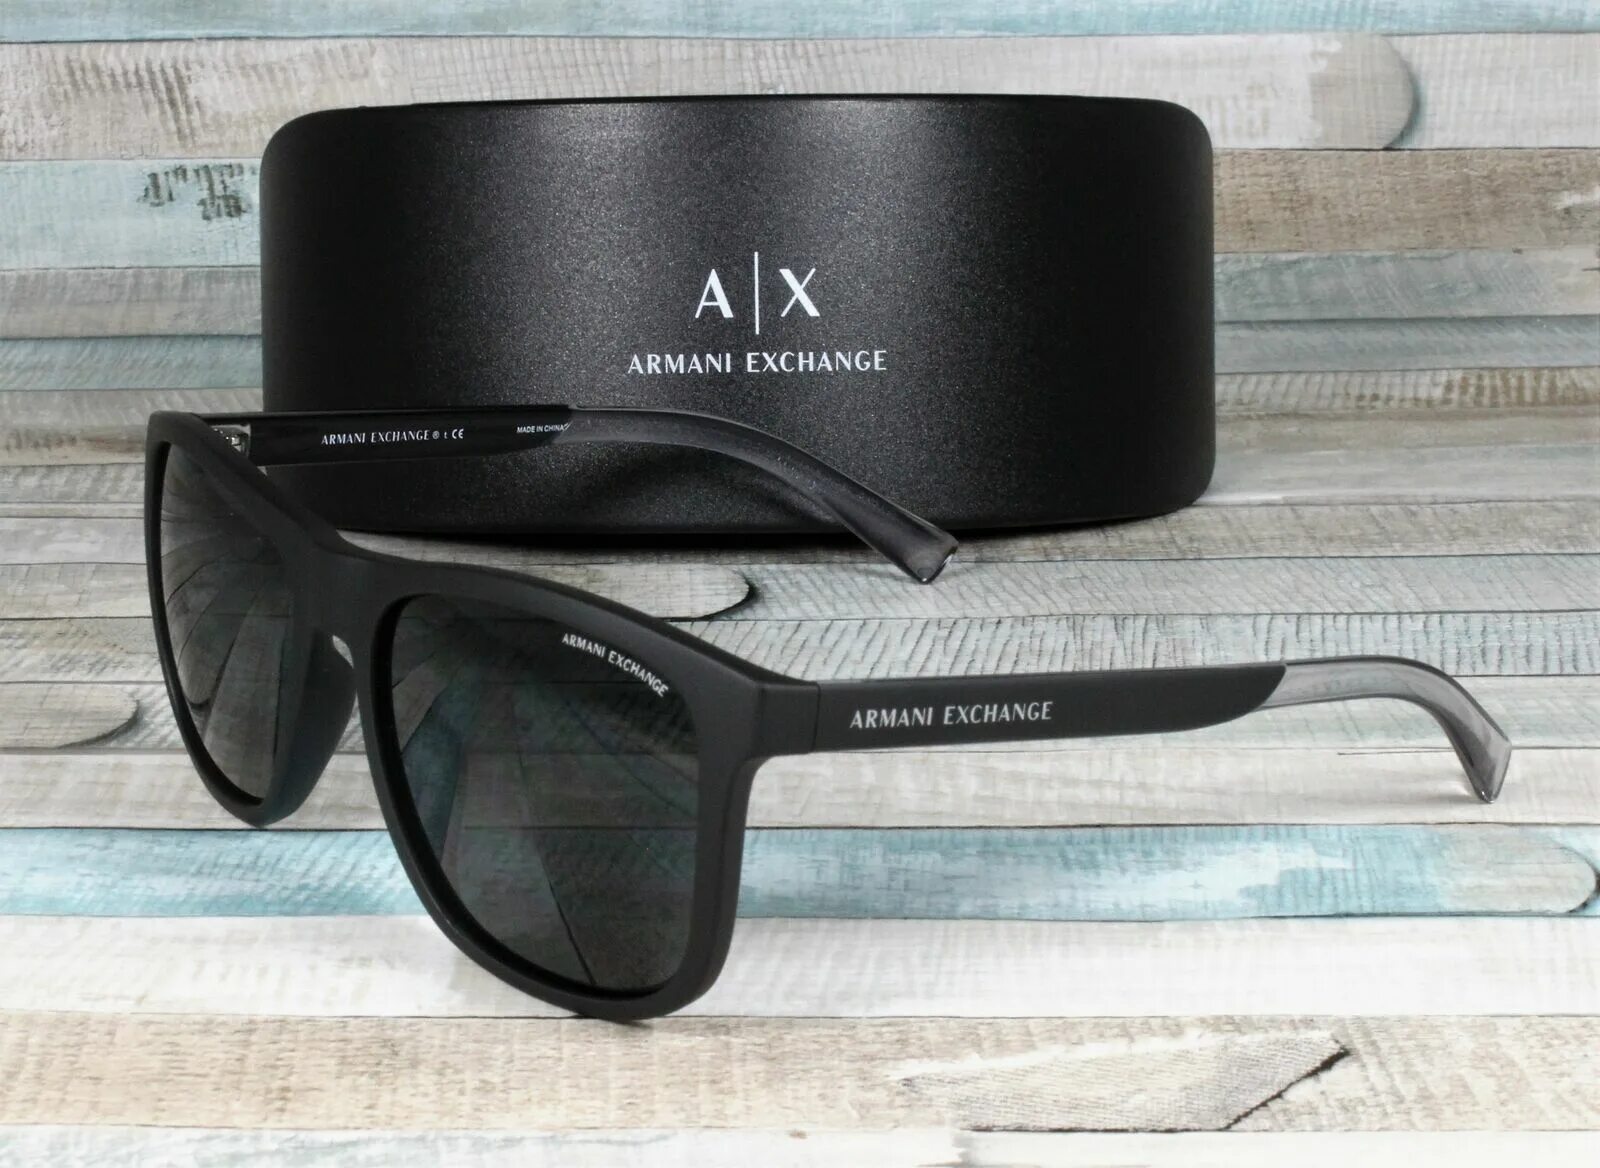 Очки Armani Exchange AX 4070s 80788g. Armani Exchange 0ax2029s очки. Очки AX Armani Exchange солнцезащитные. Очки Armani Exchange AX 4080s 80786g. Солнцезащитные очки armani мужские